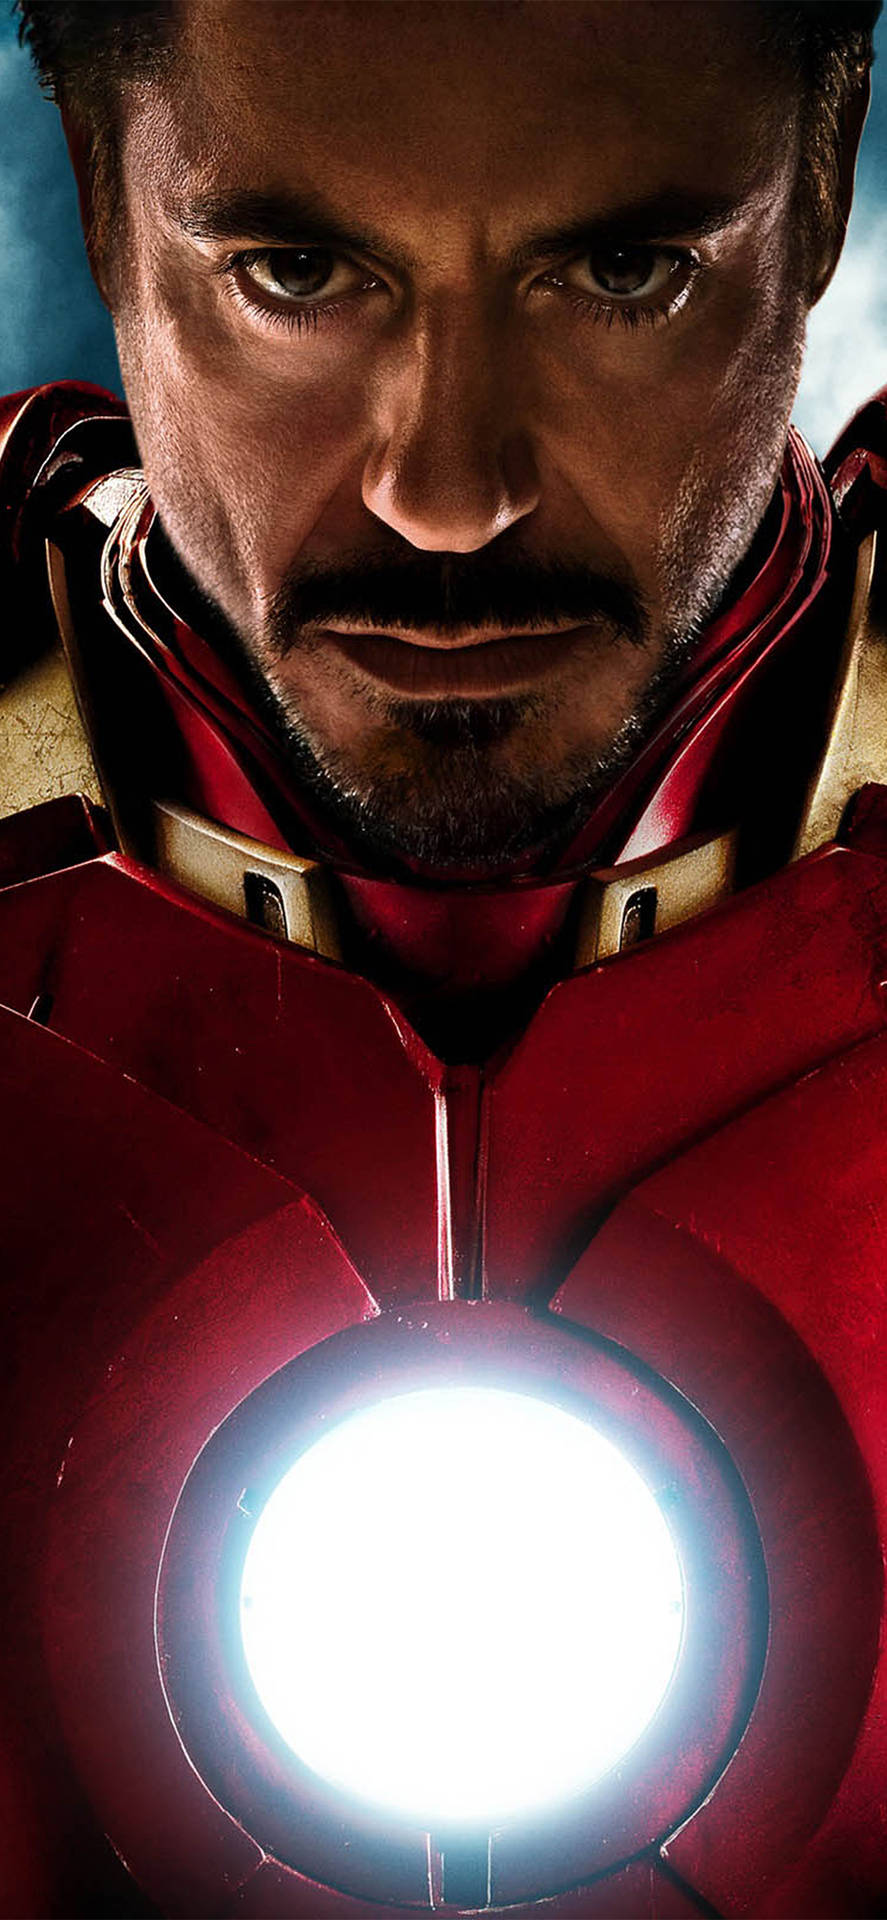 Tony Stark Known As Iron Man Superhero Wallpaper